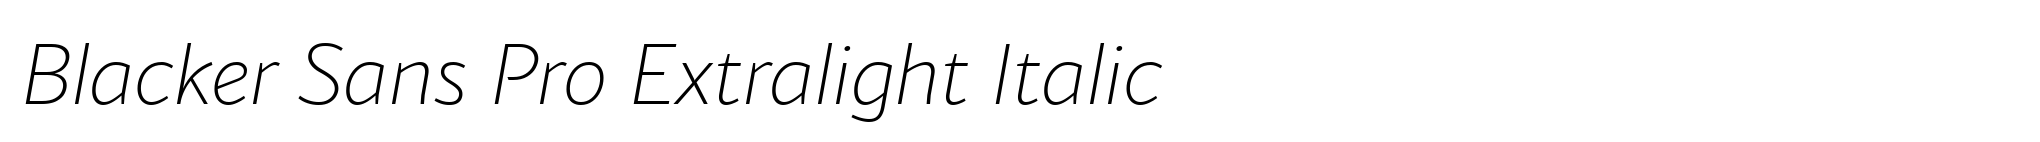 Blacker Sans Pro Extralight Italic image